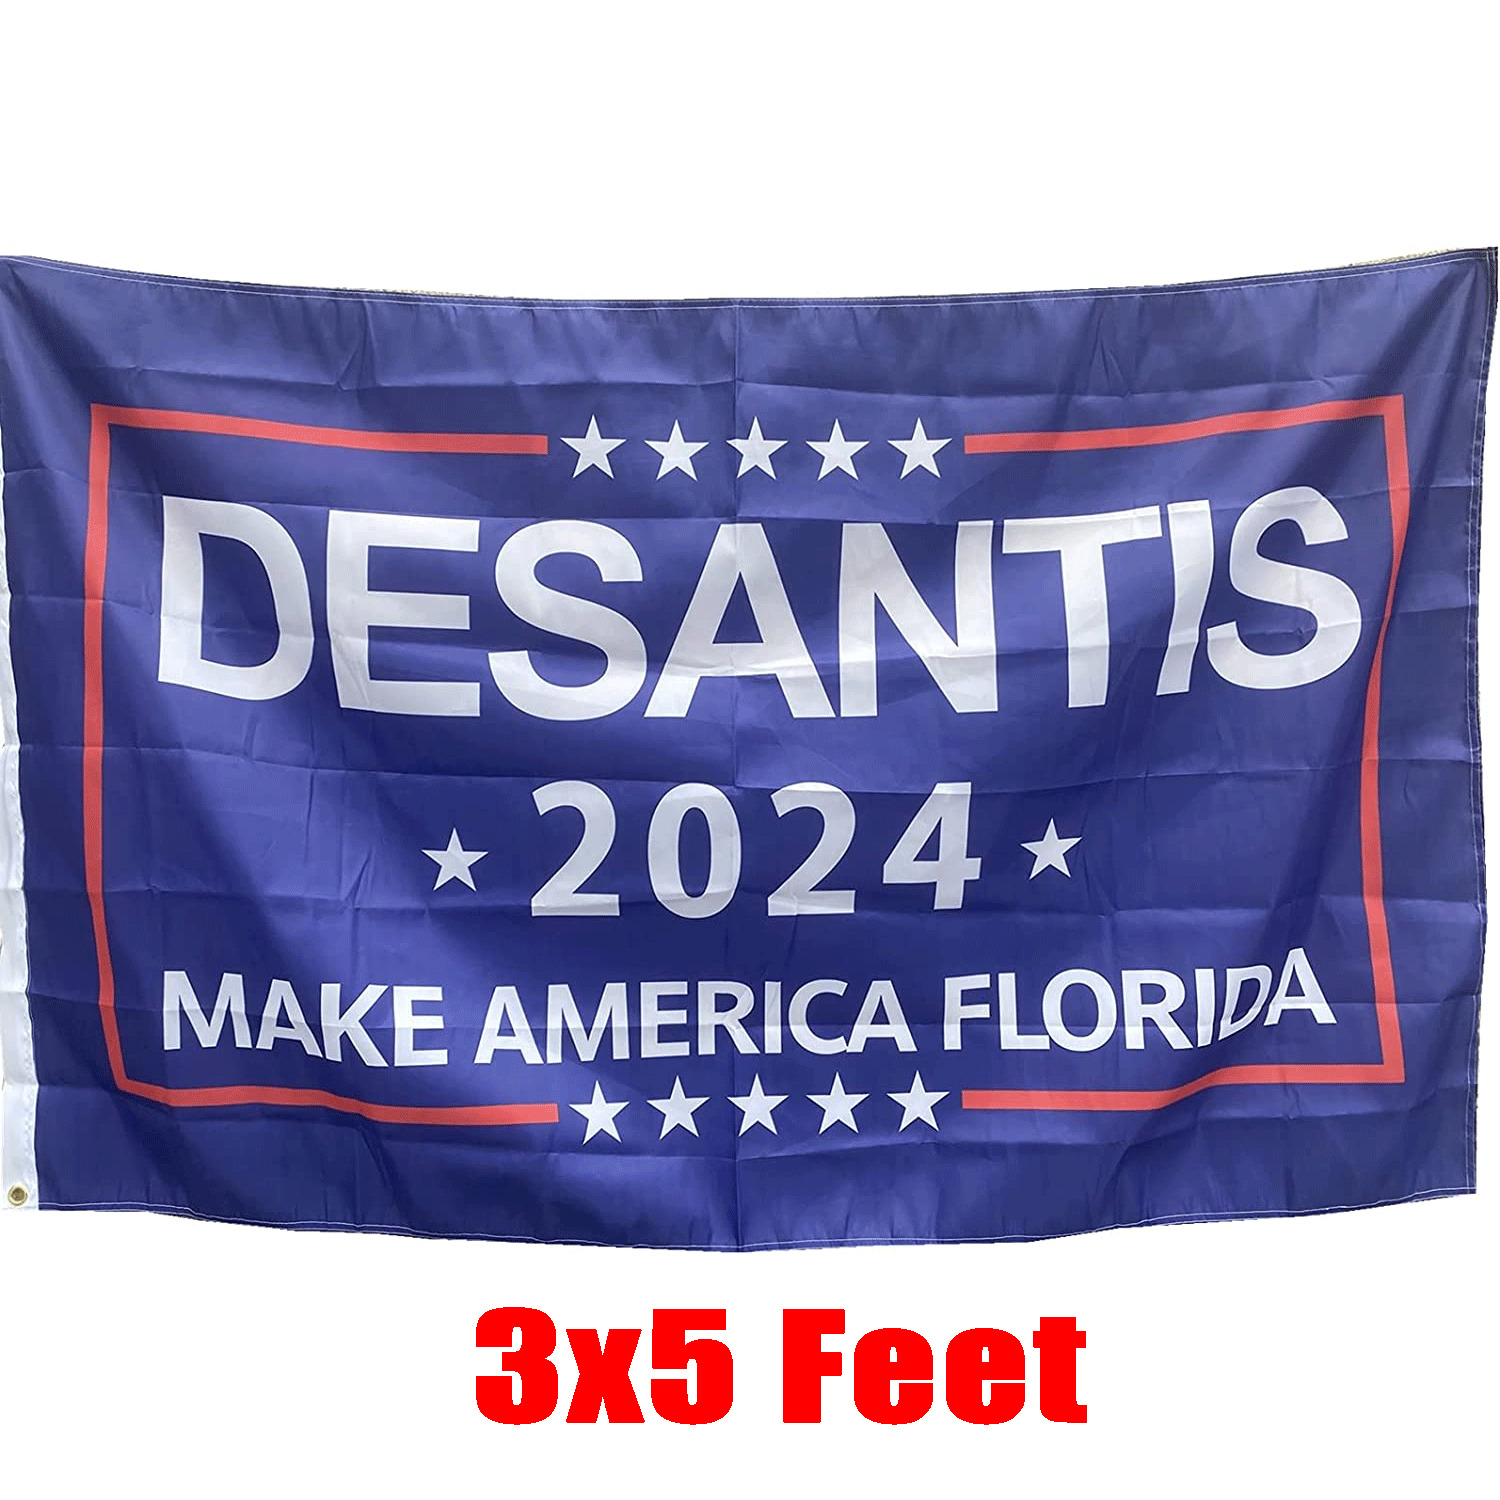 New Ron Desantis Flag 3’x5’ 2024 Make America Florida Presidential Candidate US